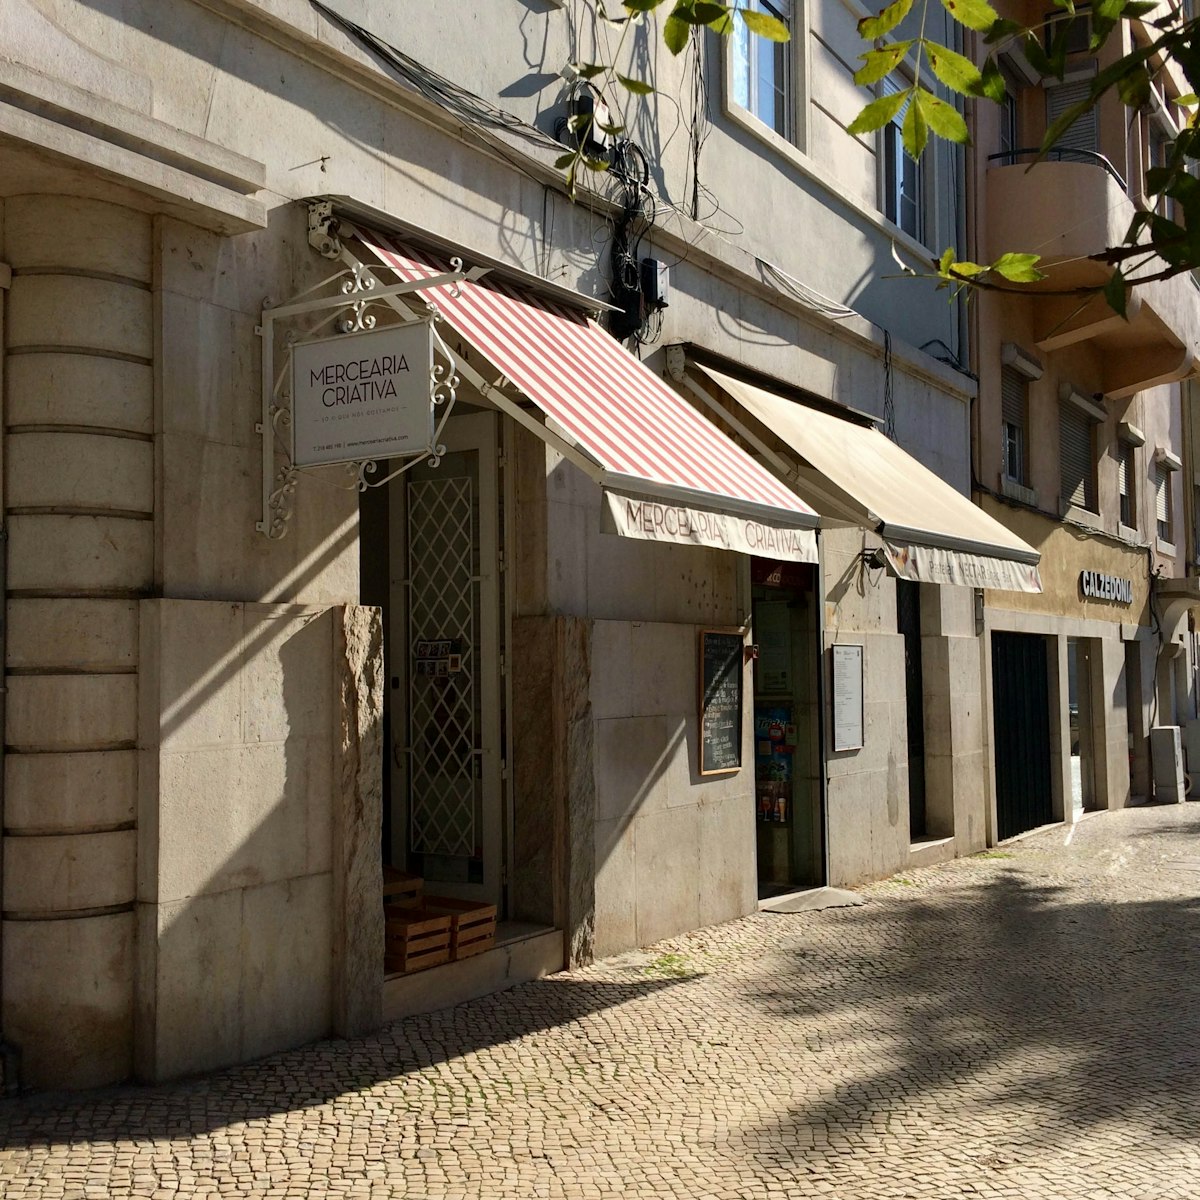 Mercearia Criativa in Lisbon